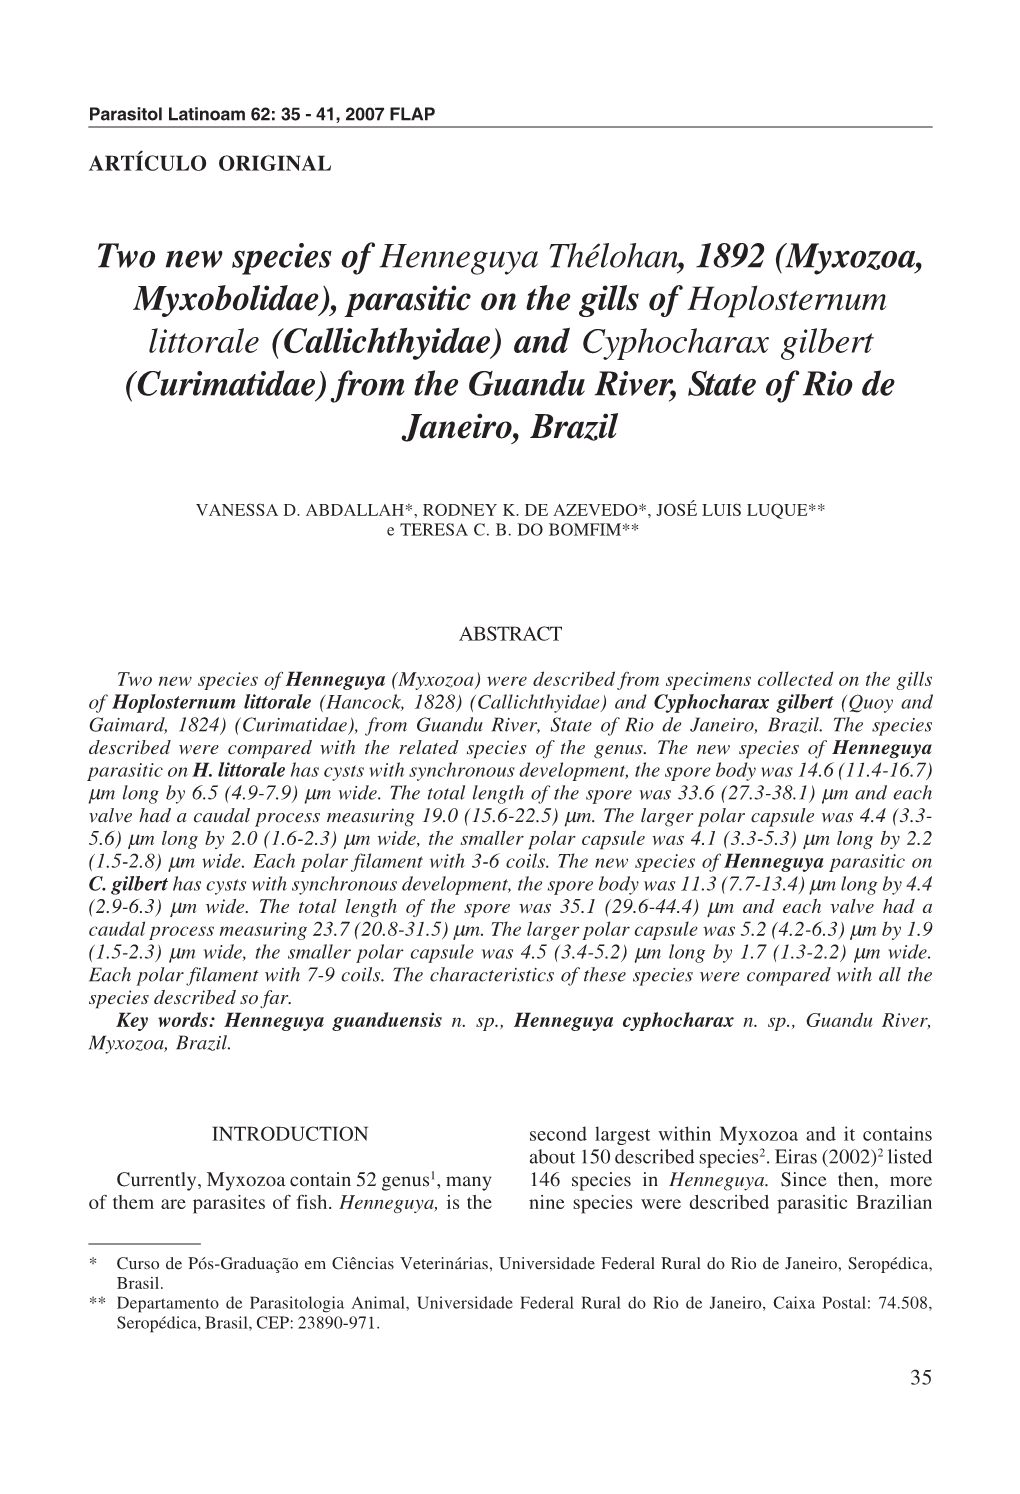 (Myxozoa, Myxobolidae), Parasitic on the Gills of Hoplosternum Littorale